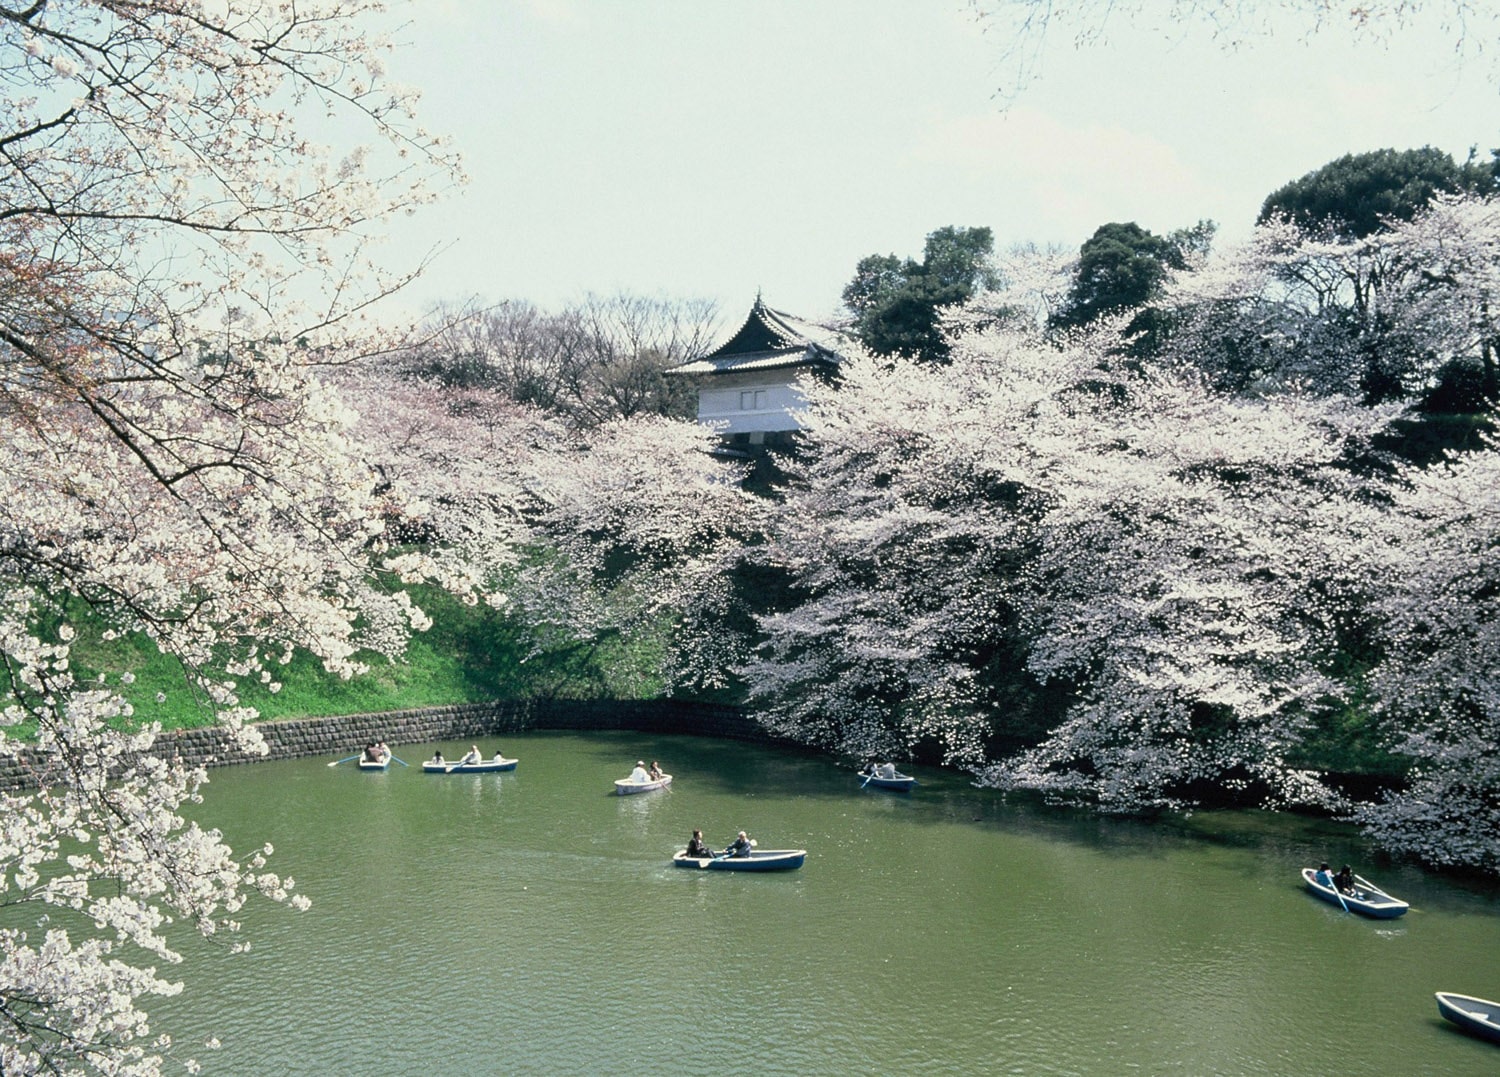 Chiyoda City Cherry Blossom Festival